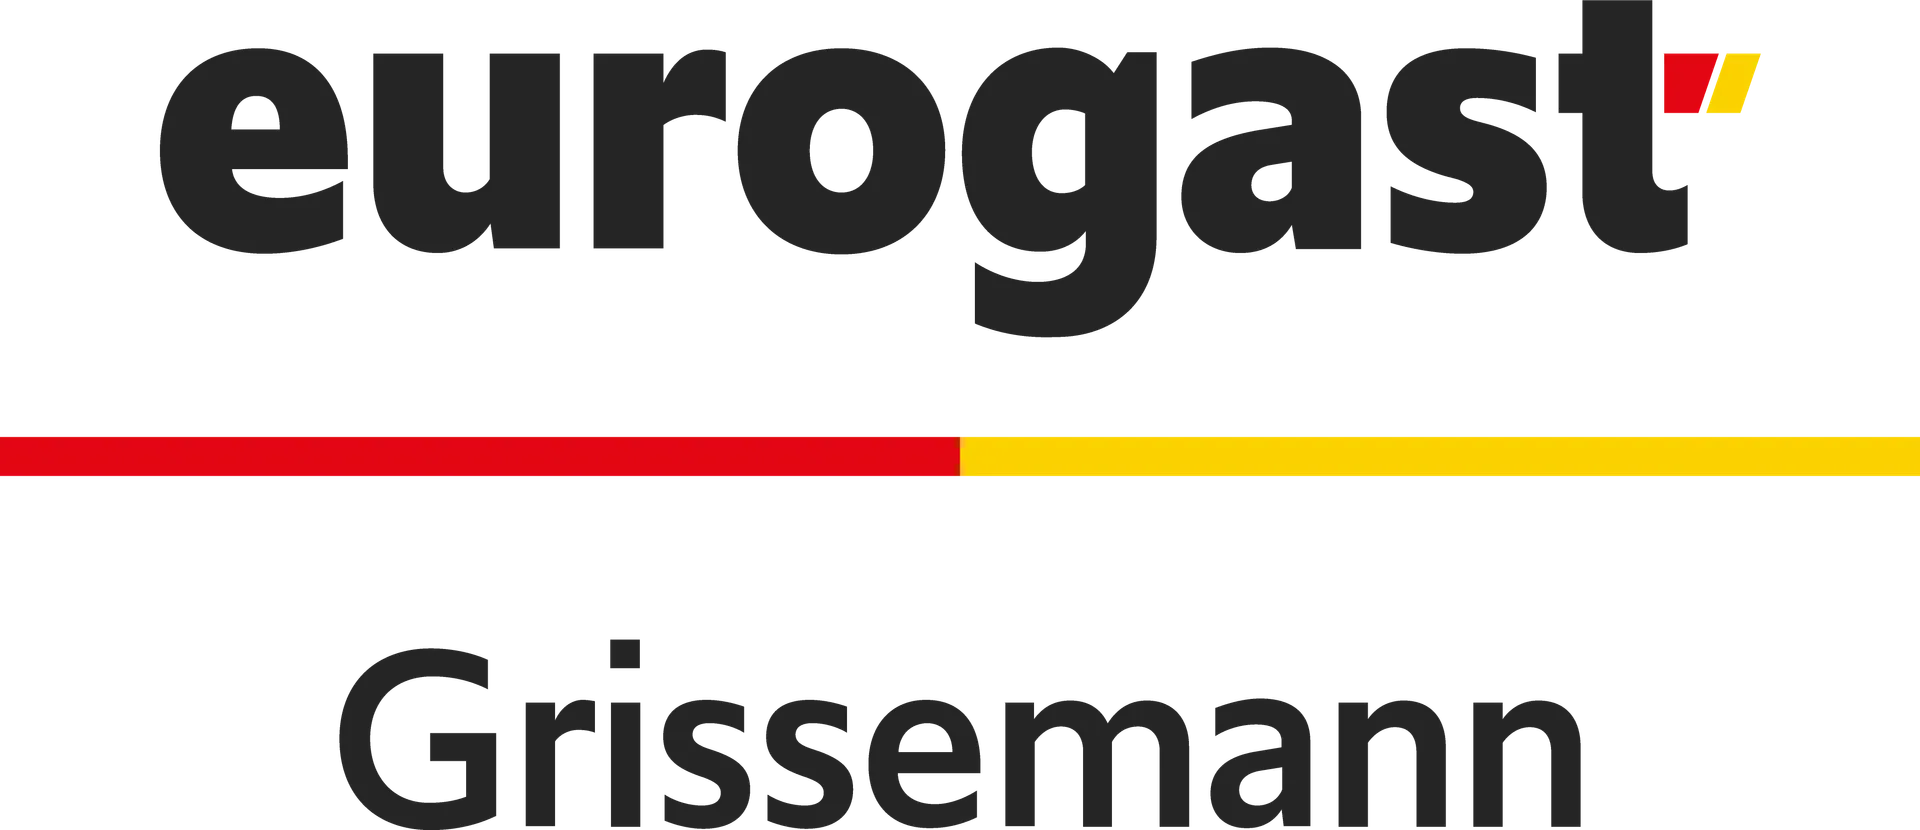 EUROGAST GRISSEMANN logo die aktuell Flugblatt